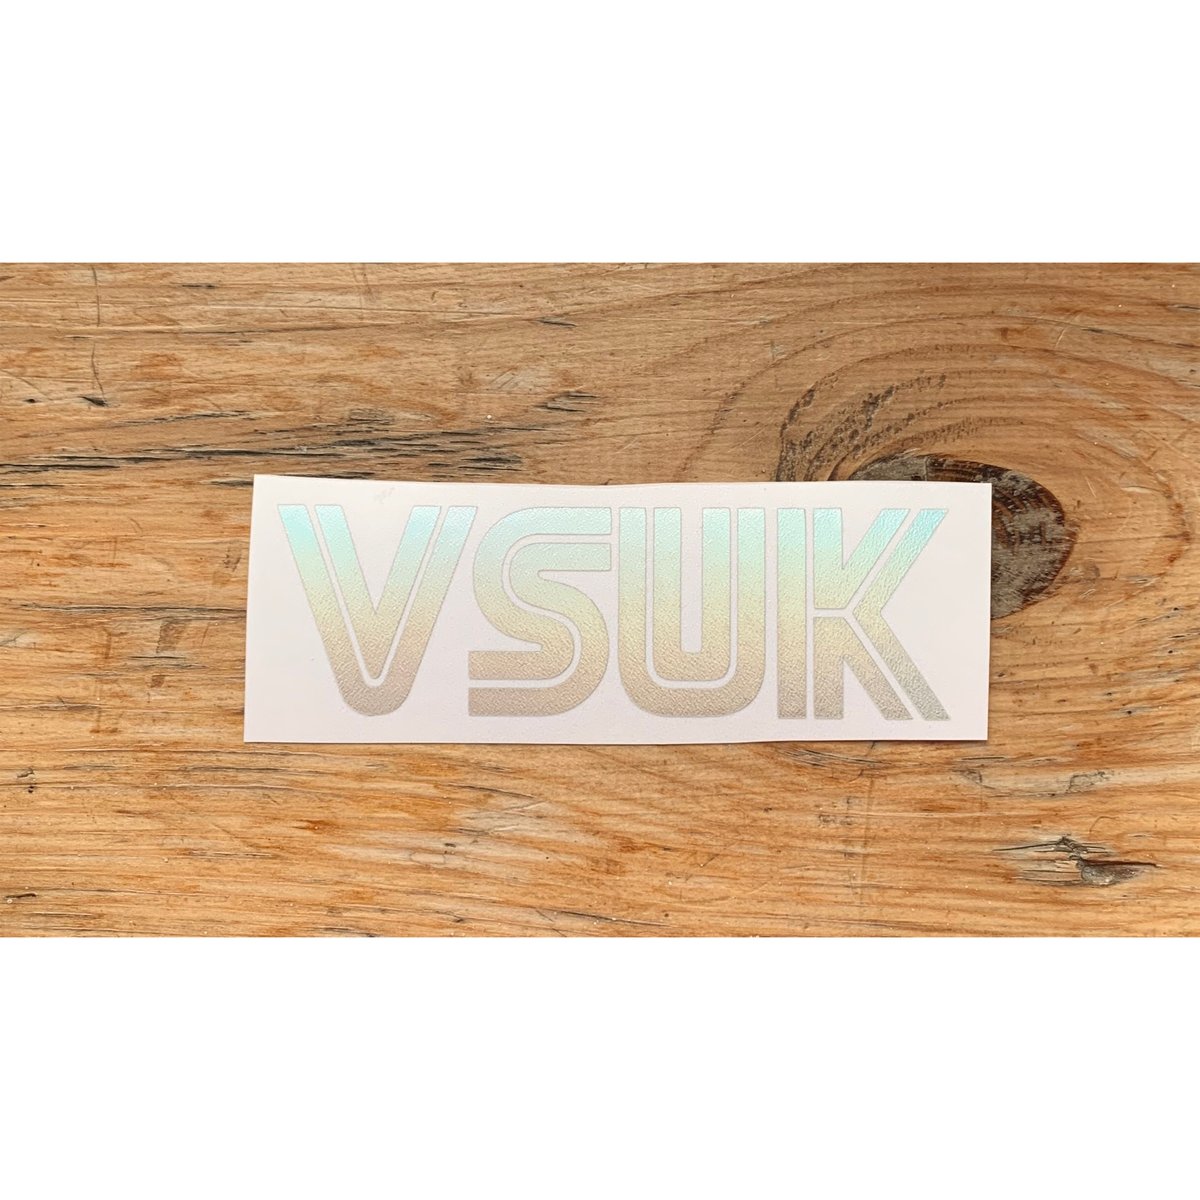 Image of VSUK Logo Sticker